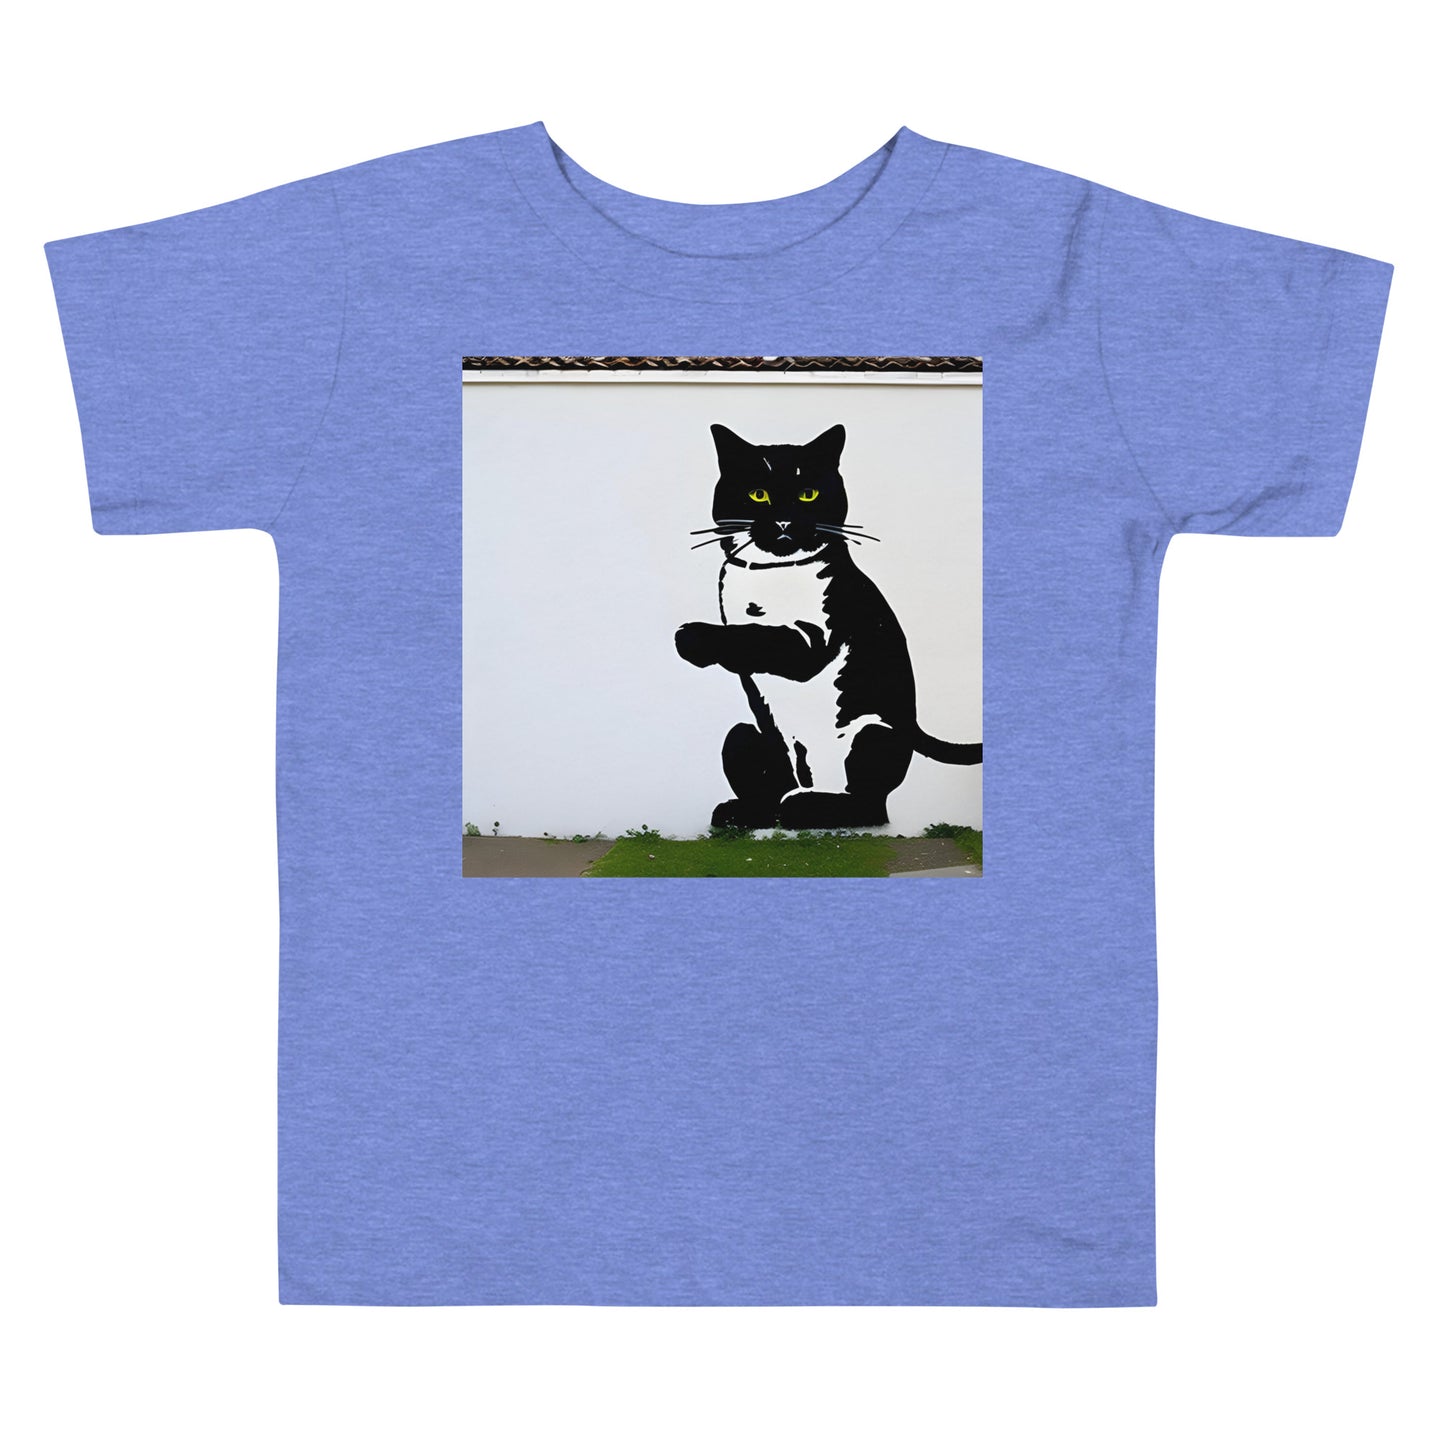 Purradise Toddler's T-Shirt - 041